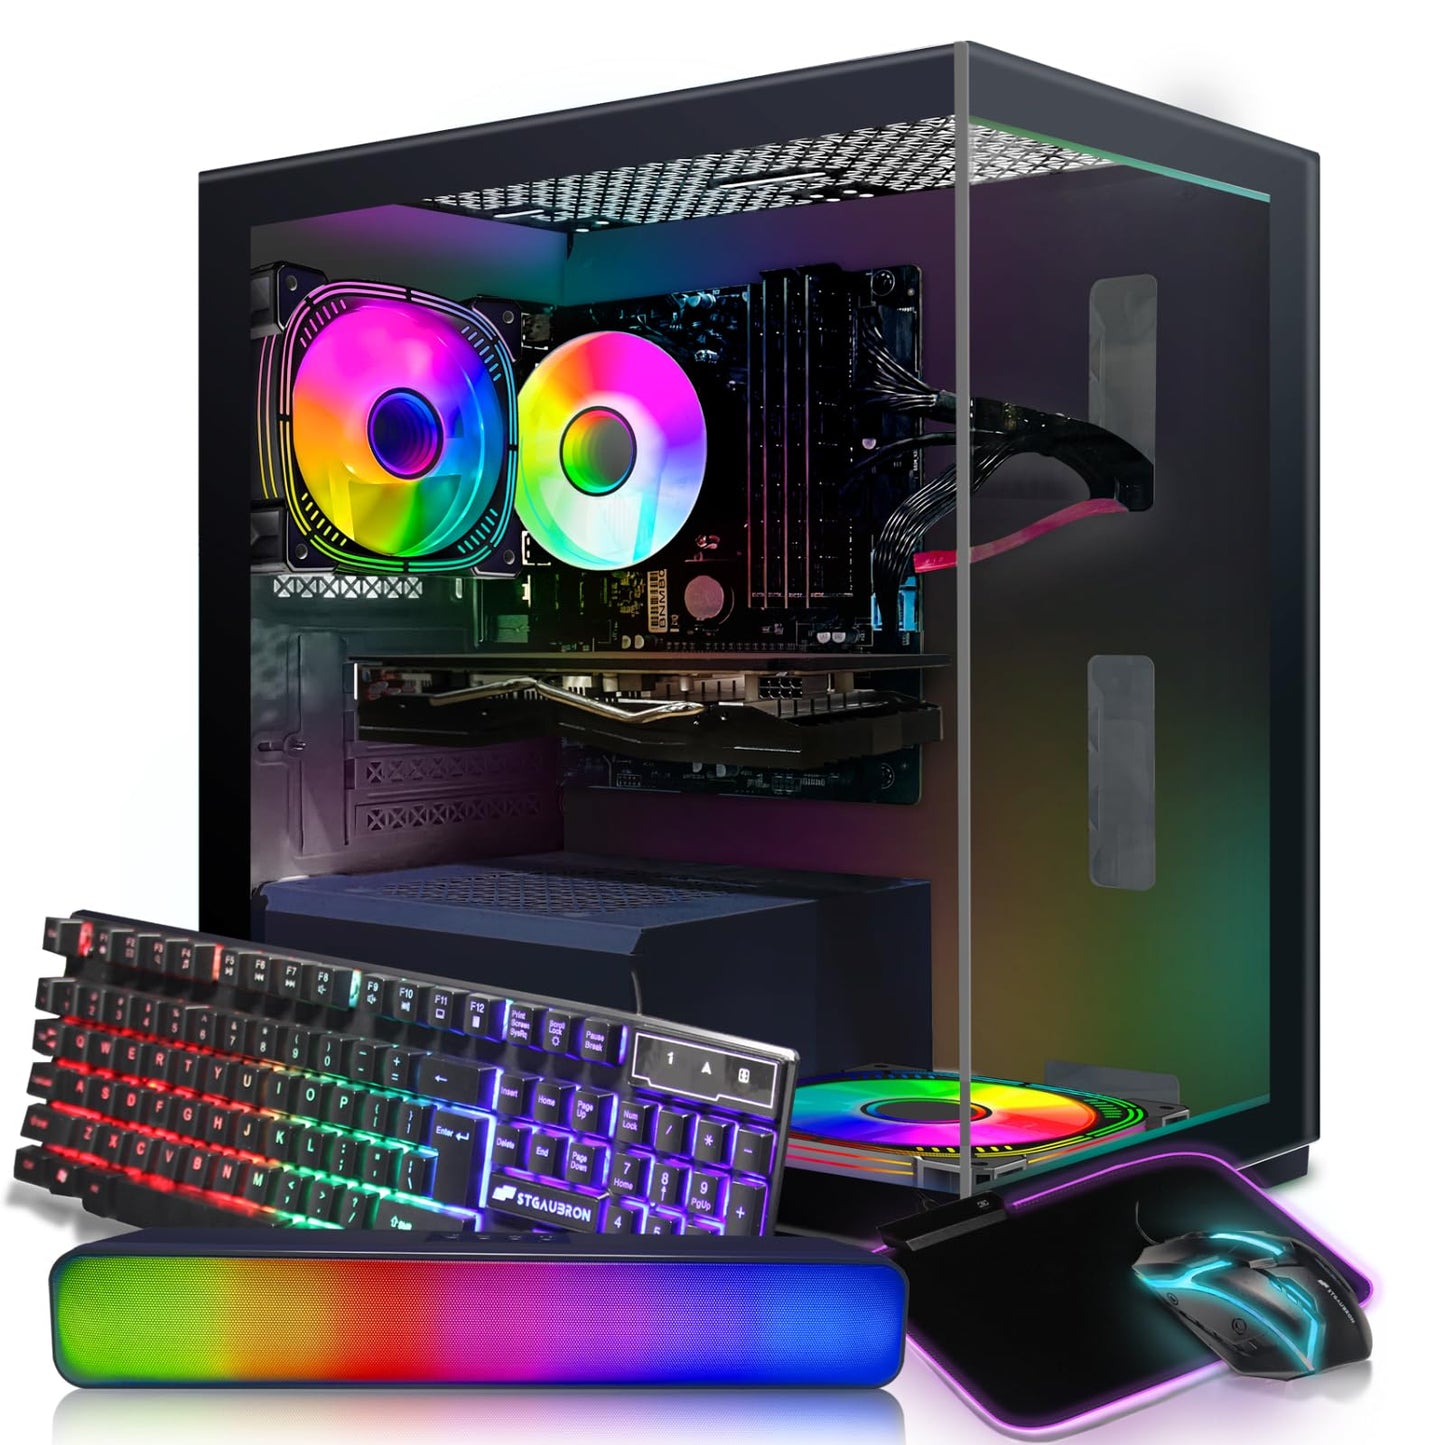 STGAubron Gaming Desktop PC,Intel Core i7 3.4G up to 3.9G,16G RAM,512G SSD,Radeon RX 580 16G GDDR5,600M WiFi,BT 5.0,RGB Fan x 2,RGB Keyboard&Mouse,RGB Mouse Pad,RGB BT Sound Bar,W10H64